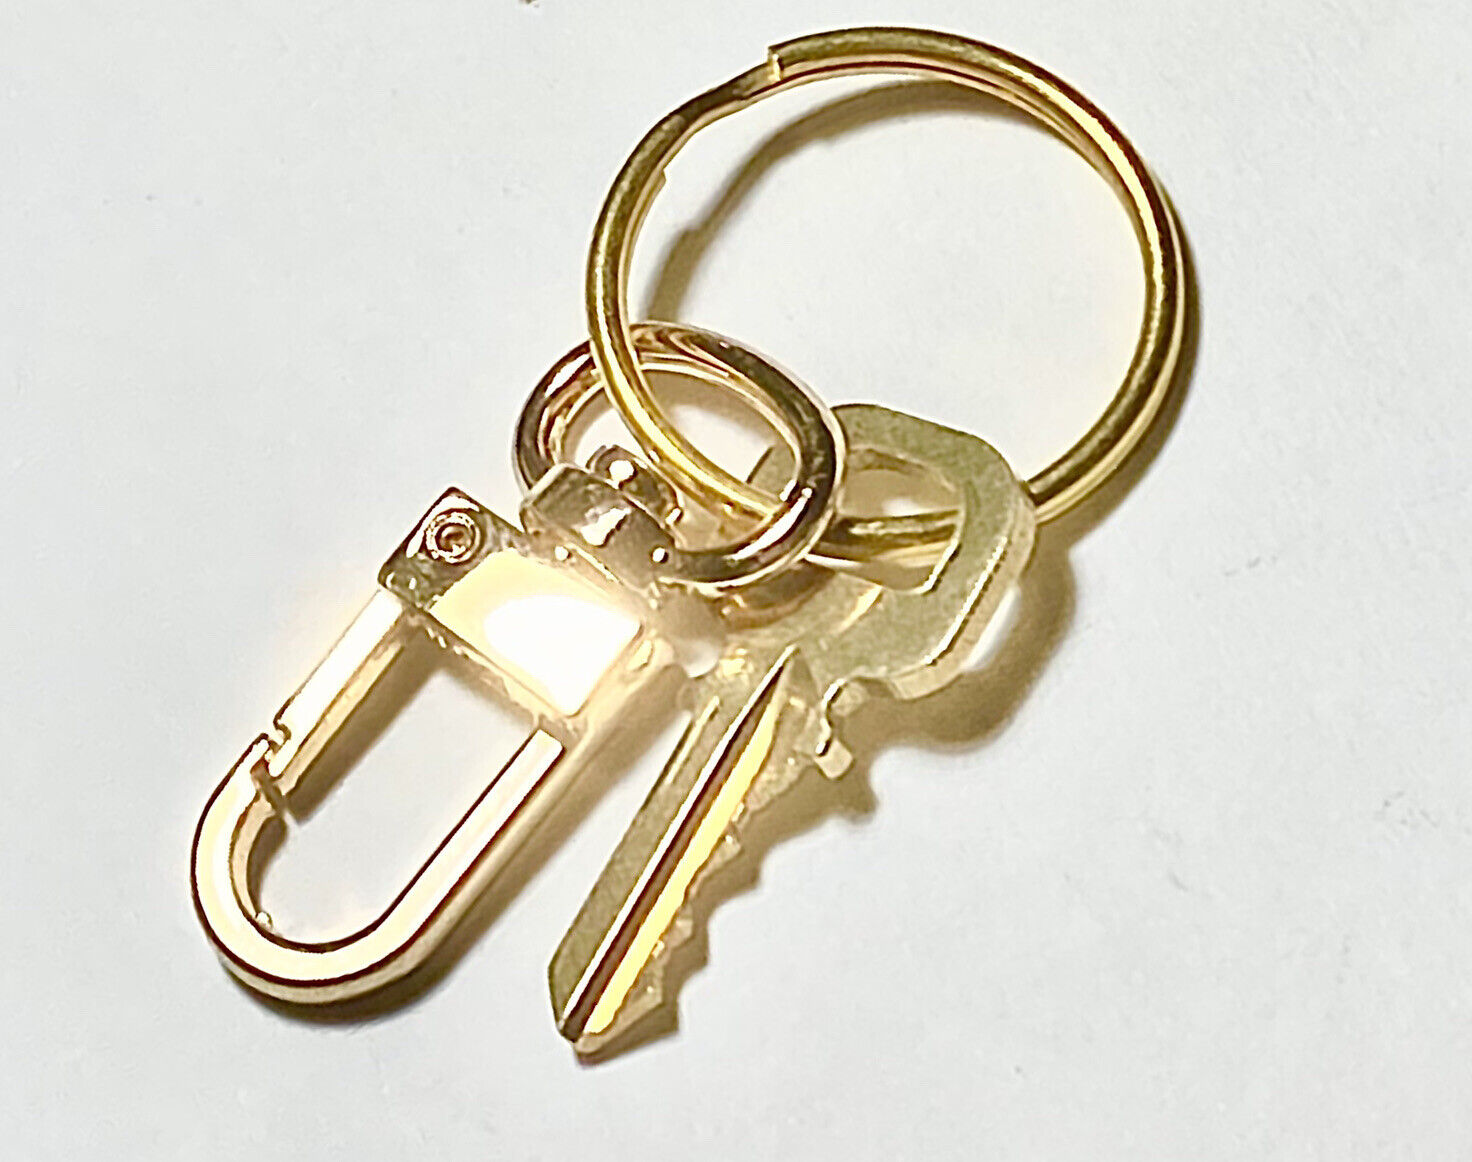 Louis Vuitton Key # 319 Brass Compatible w/ Genuine LV Lock only! - 1 Key